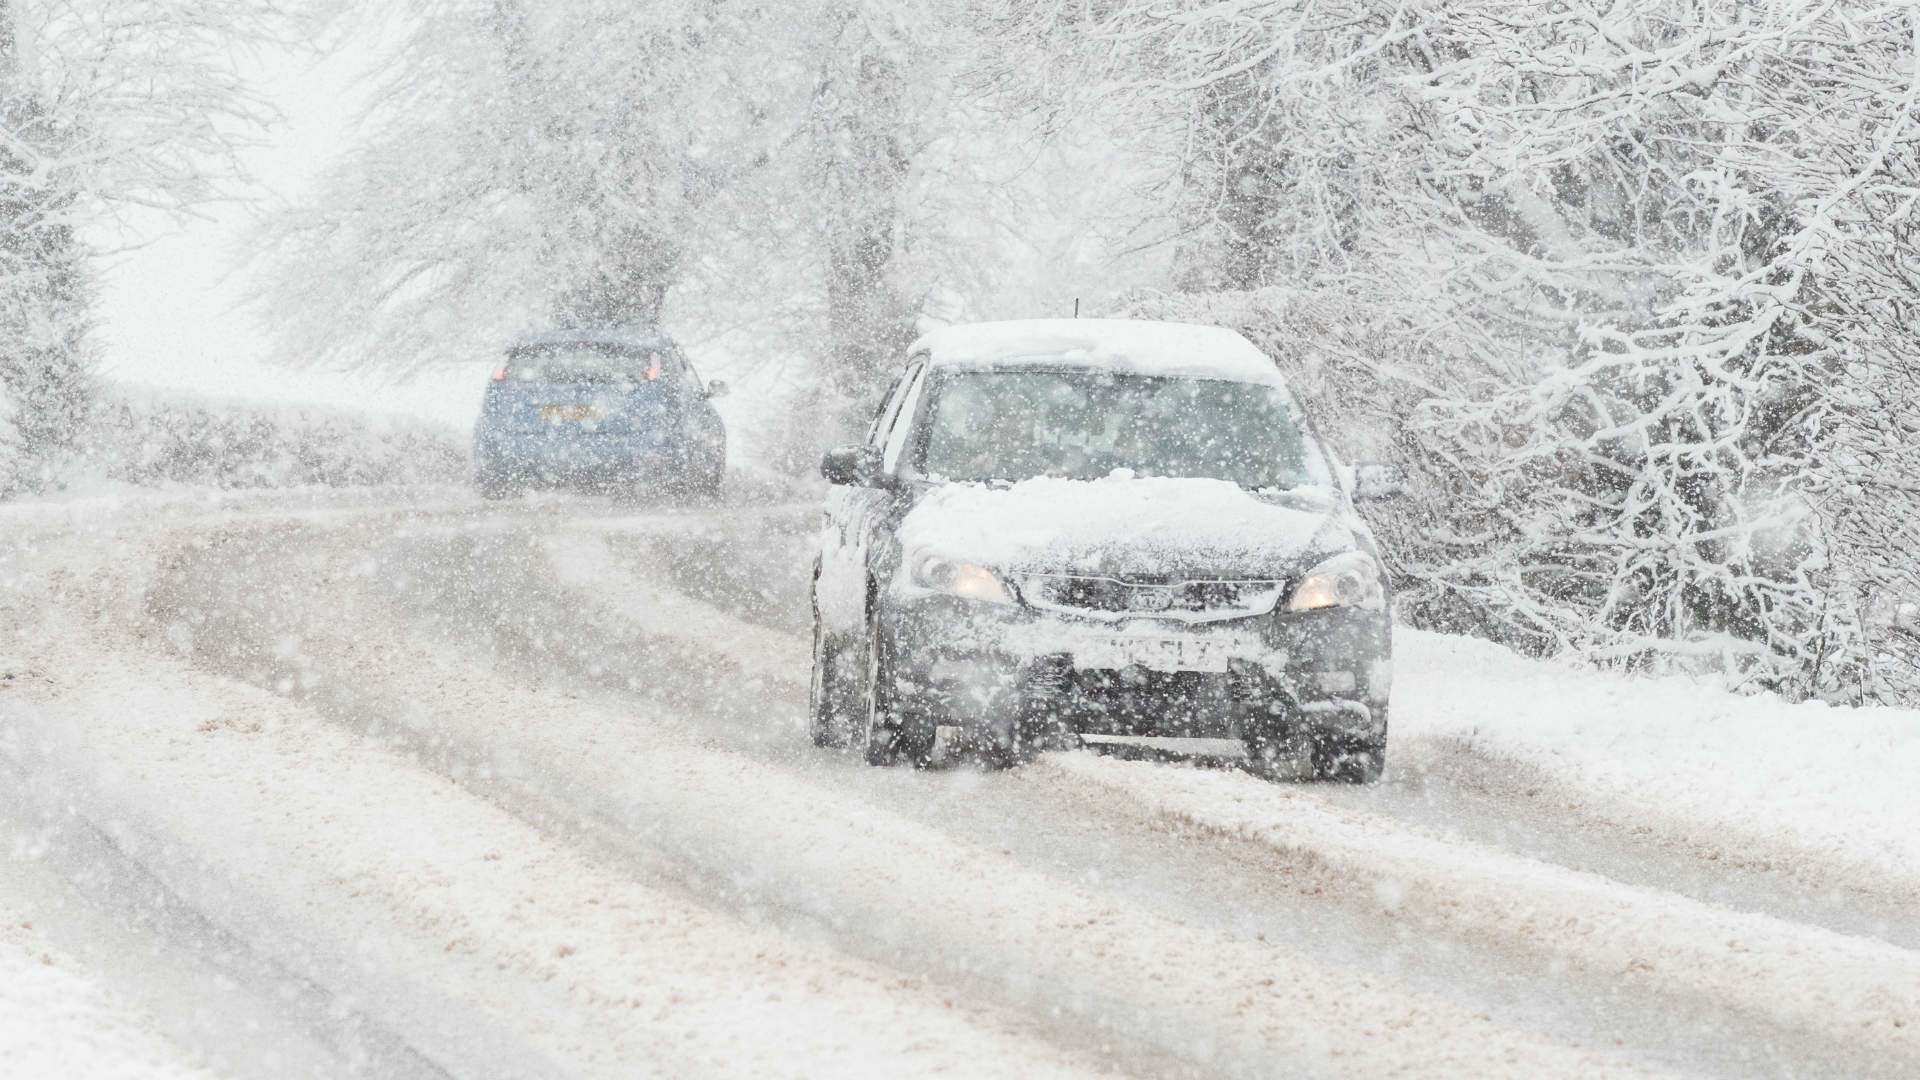 tips for safer winter driving